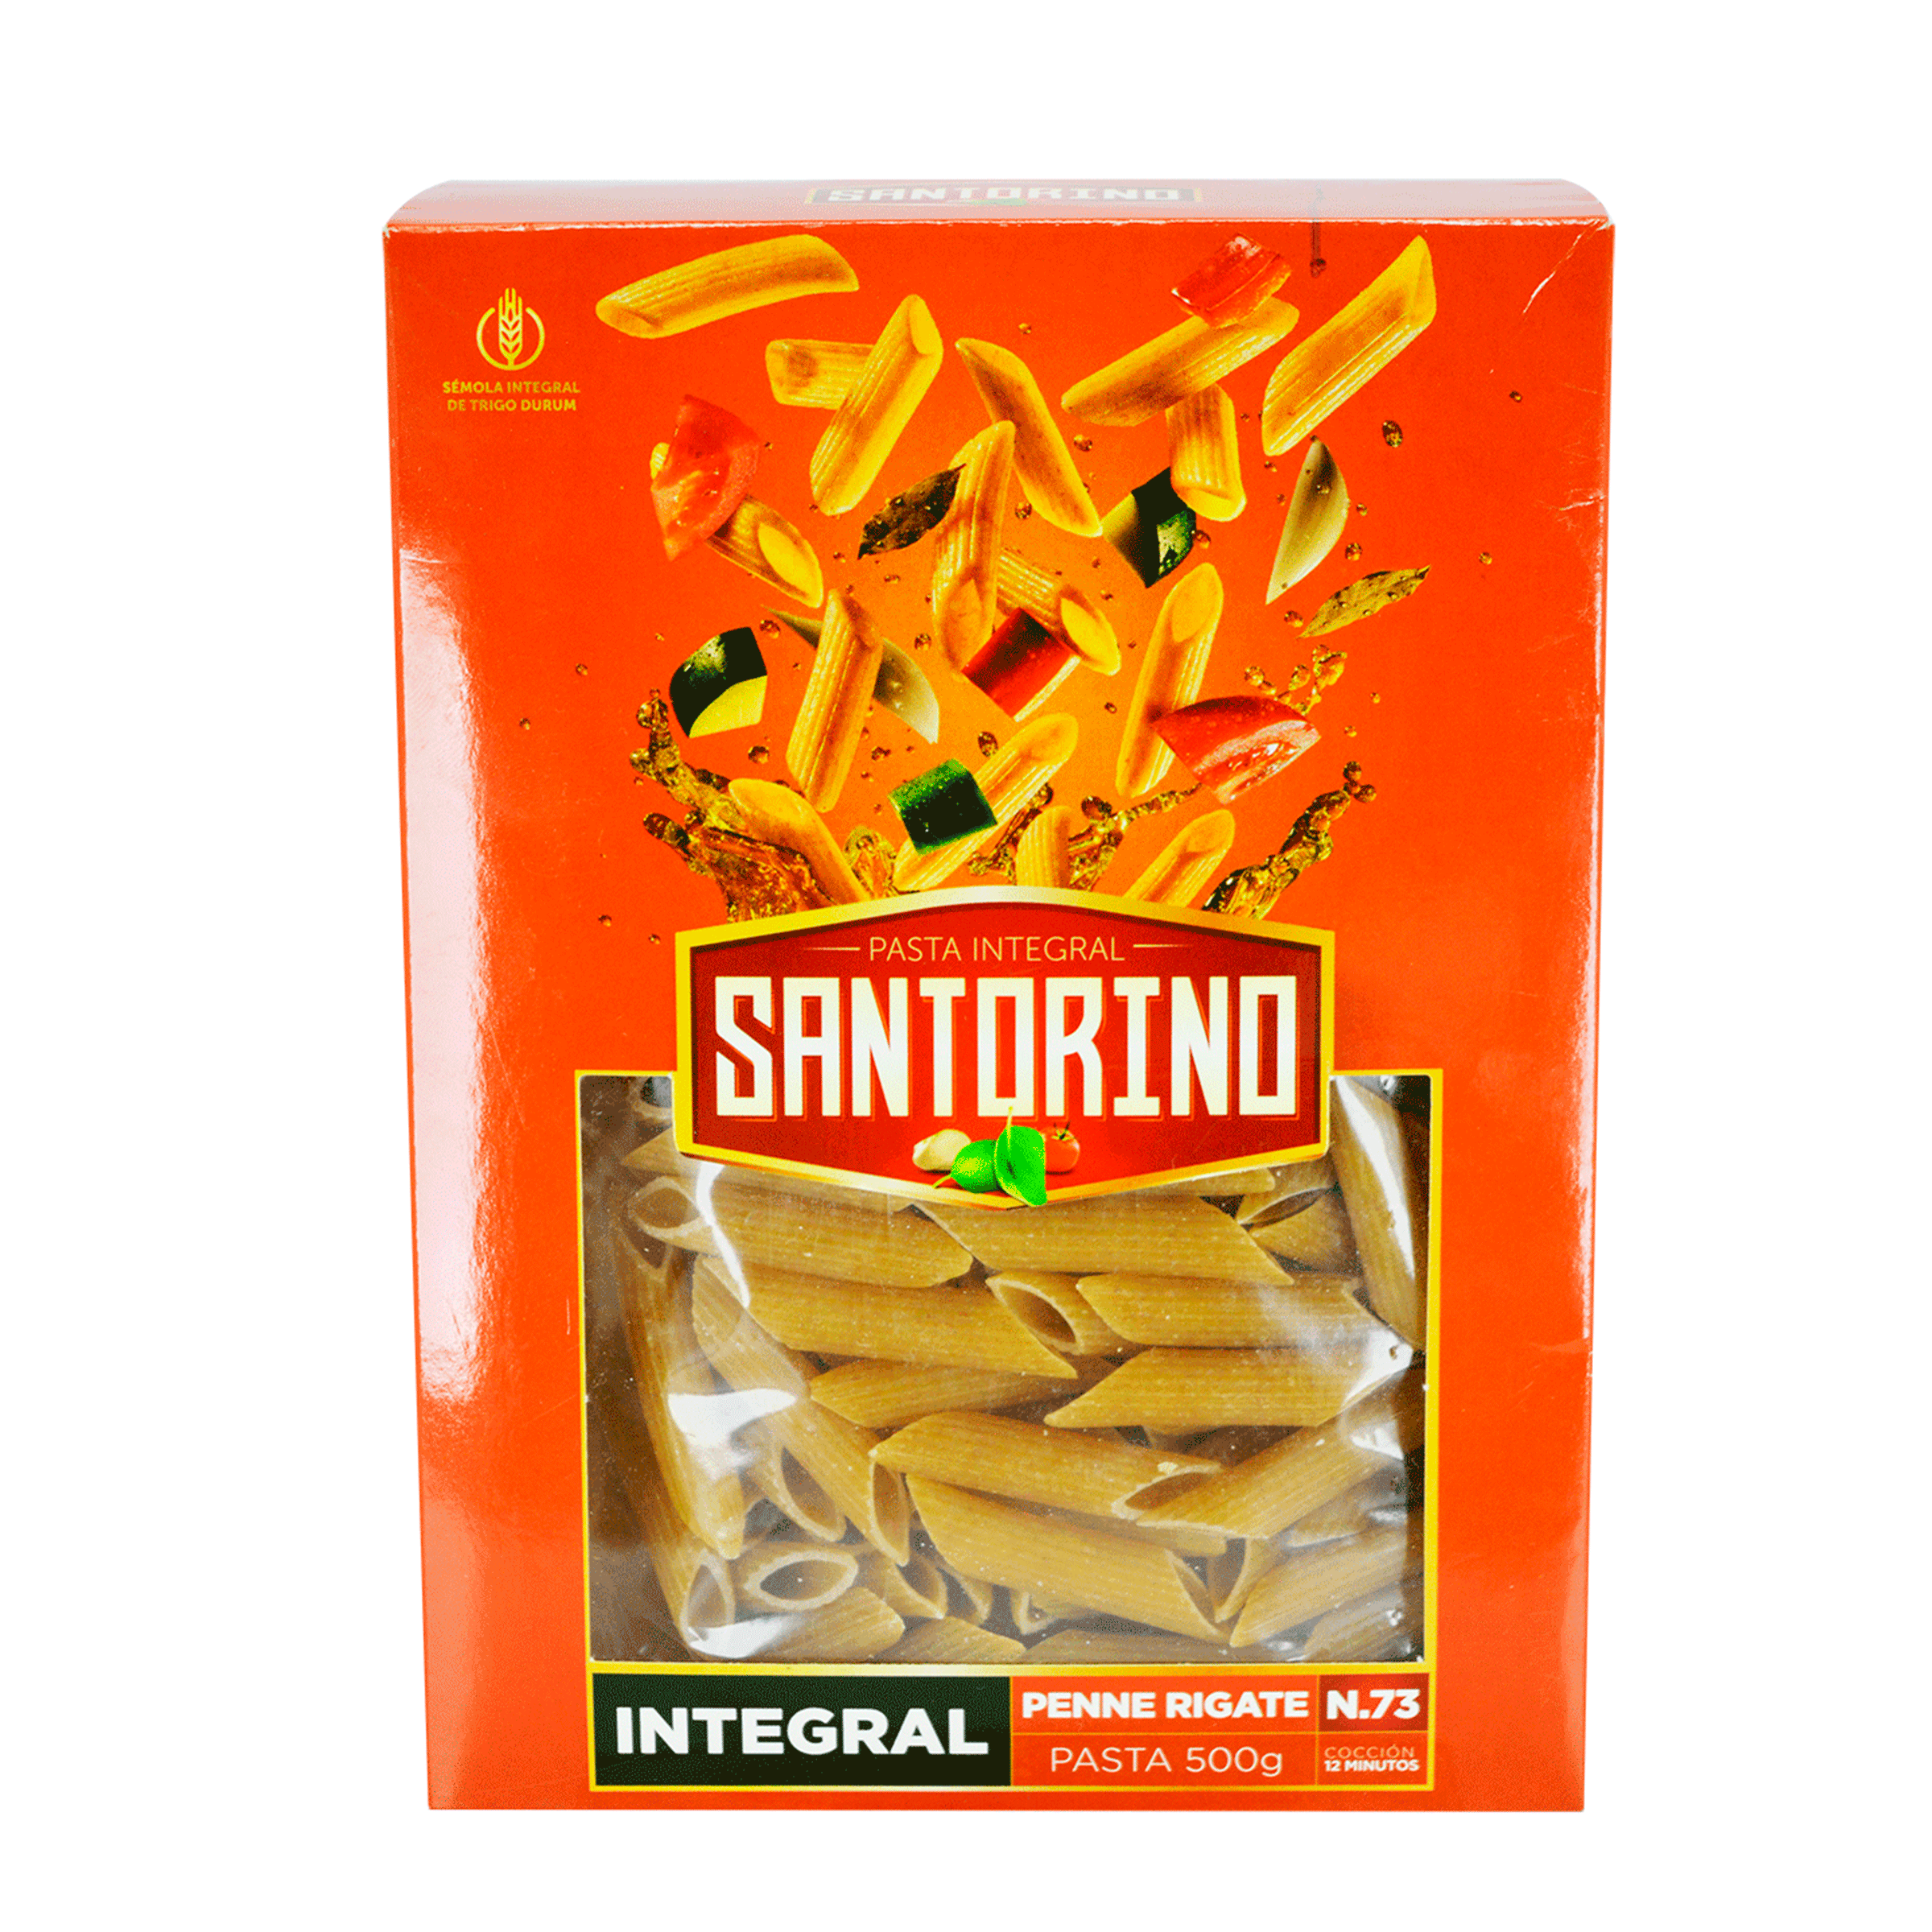 pasta-integral-penne-rigate-santorino-500-g